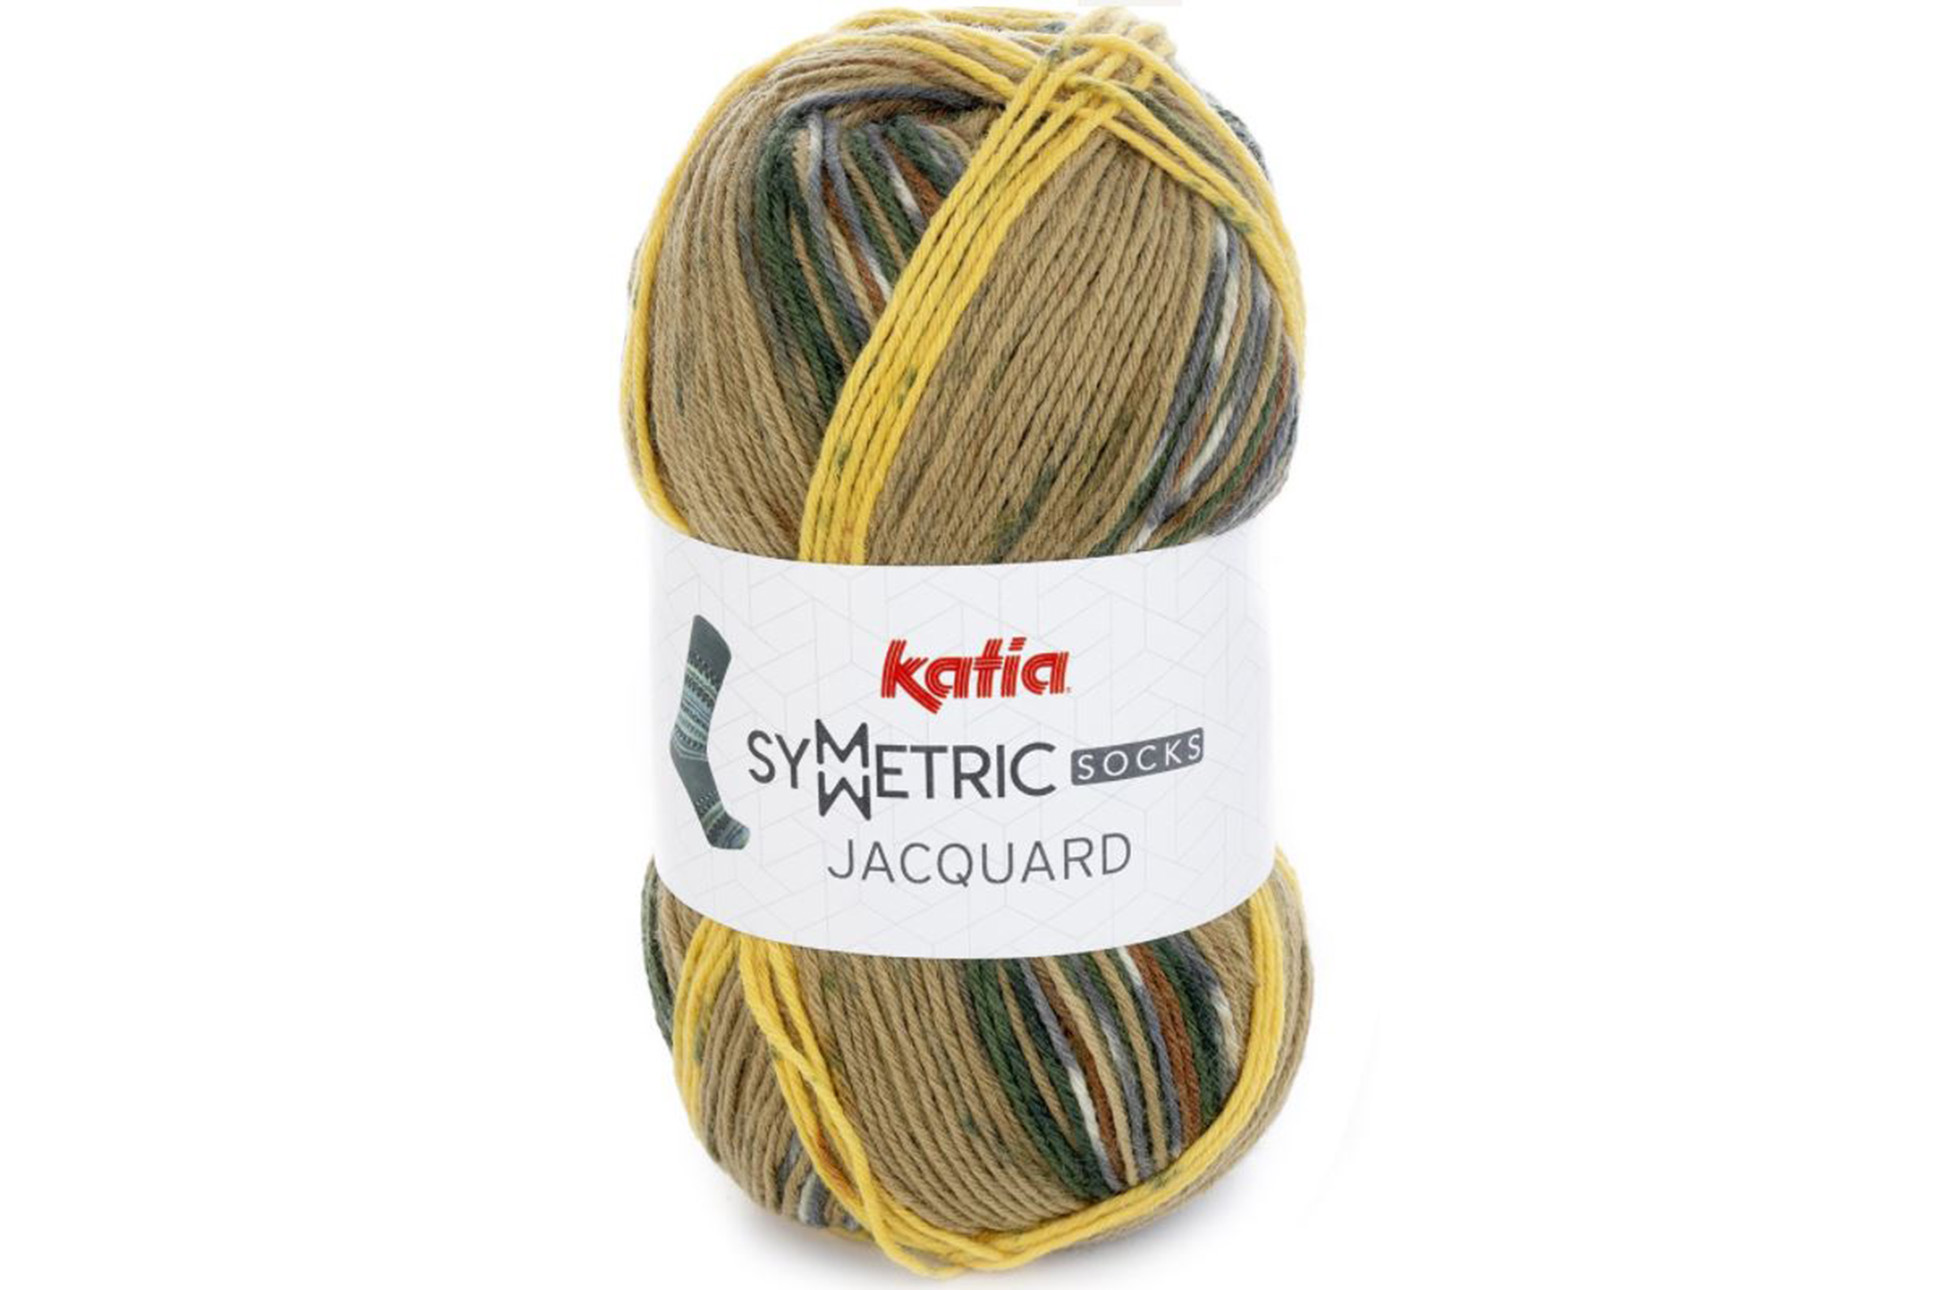 Jacquard Symmetric Socks by Katia